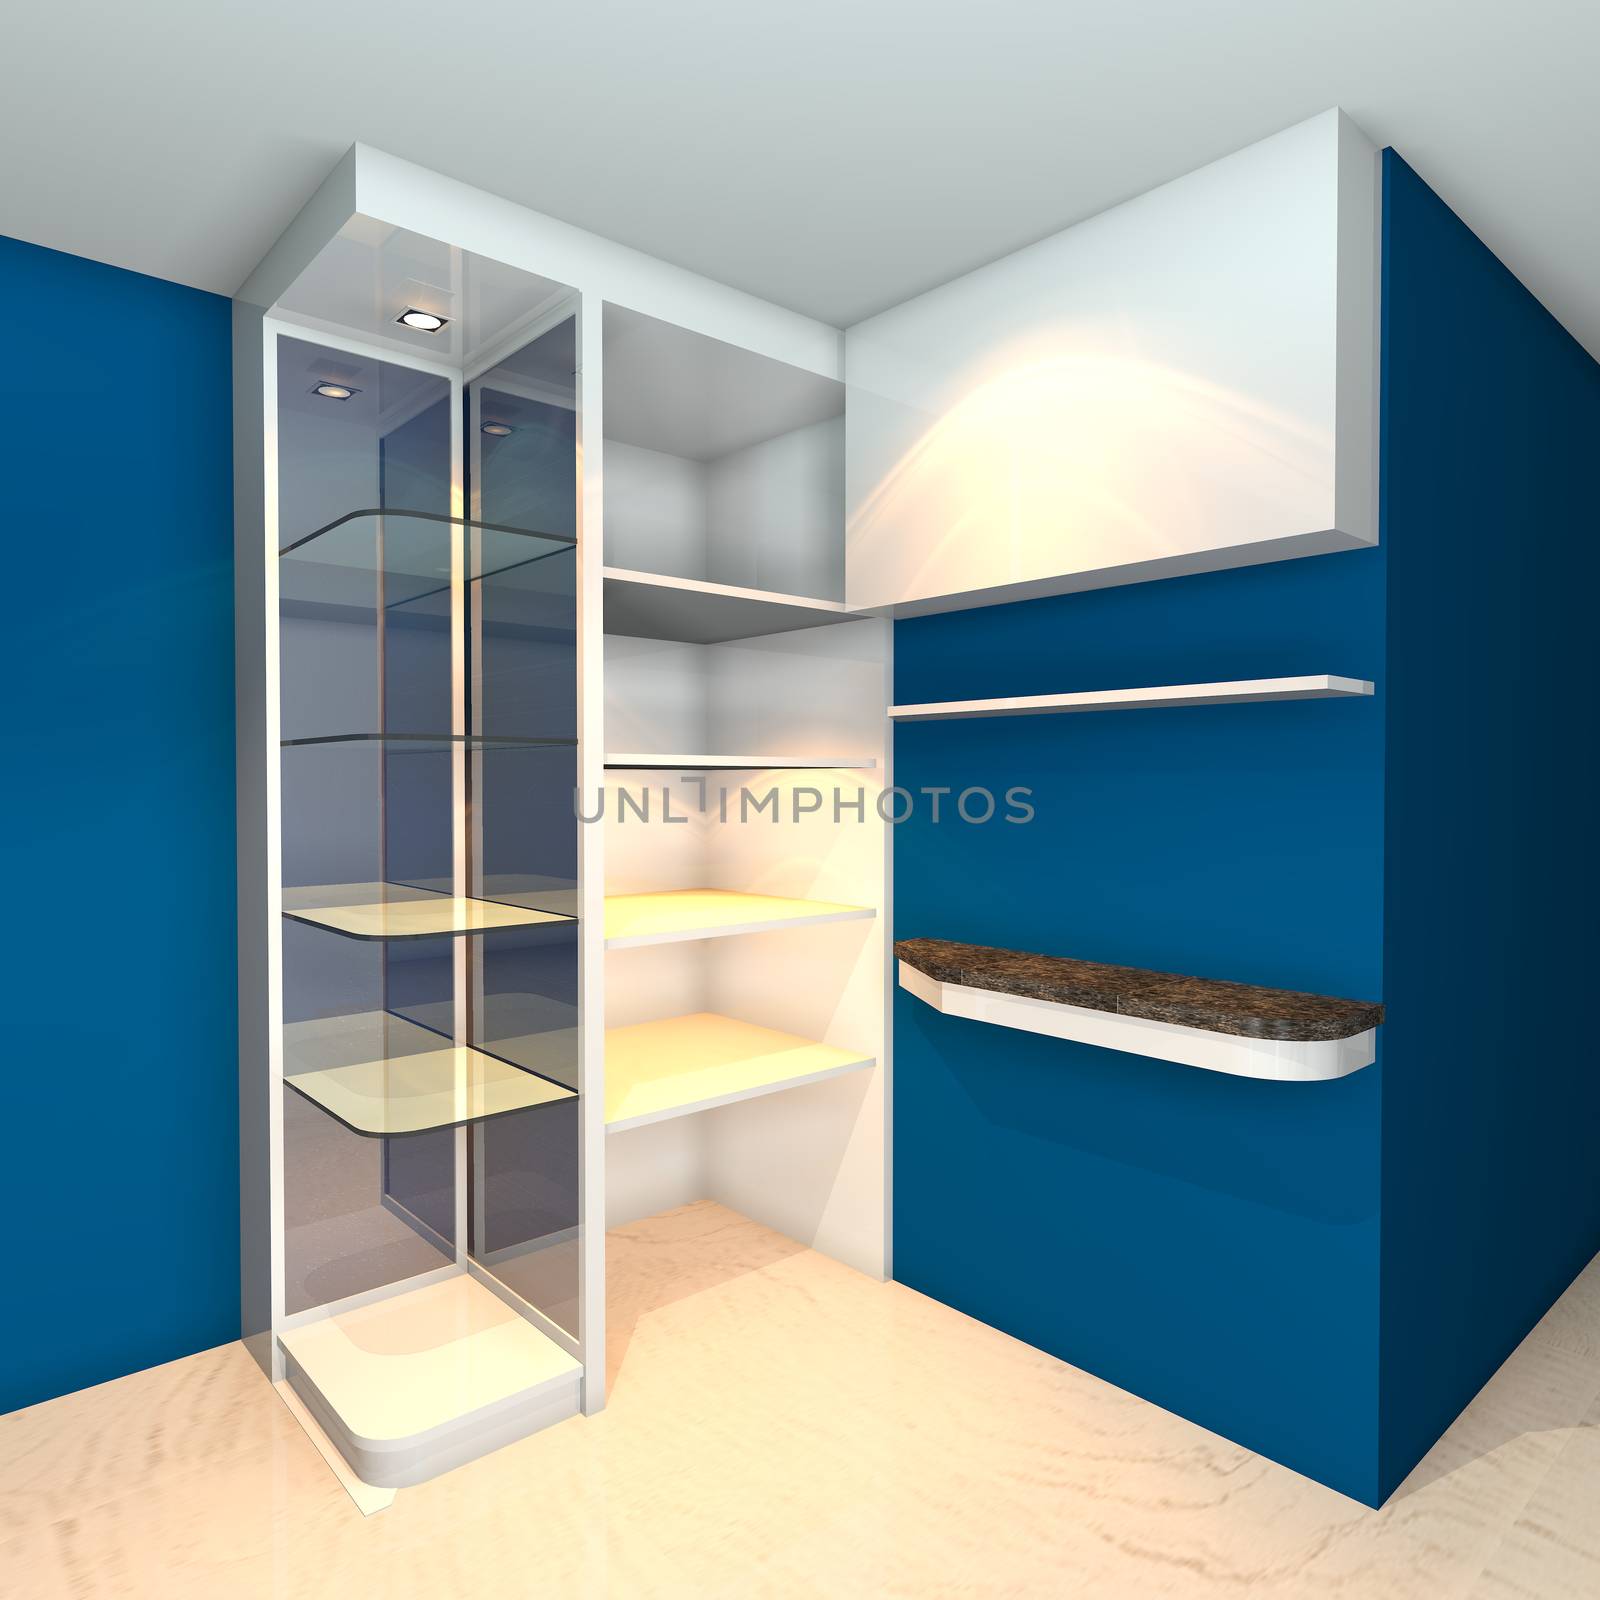 Blue built-in shelves designs, corner of the room 